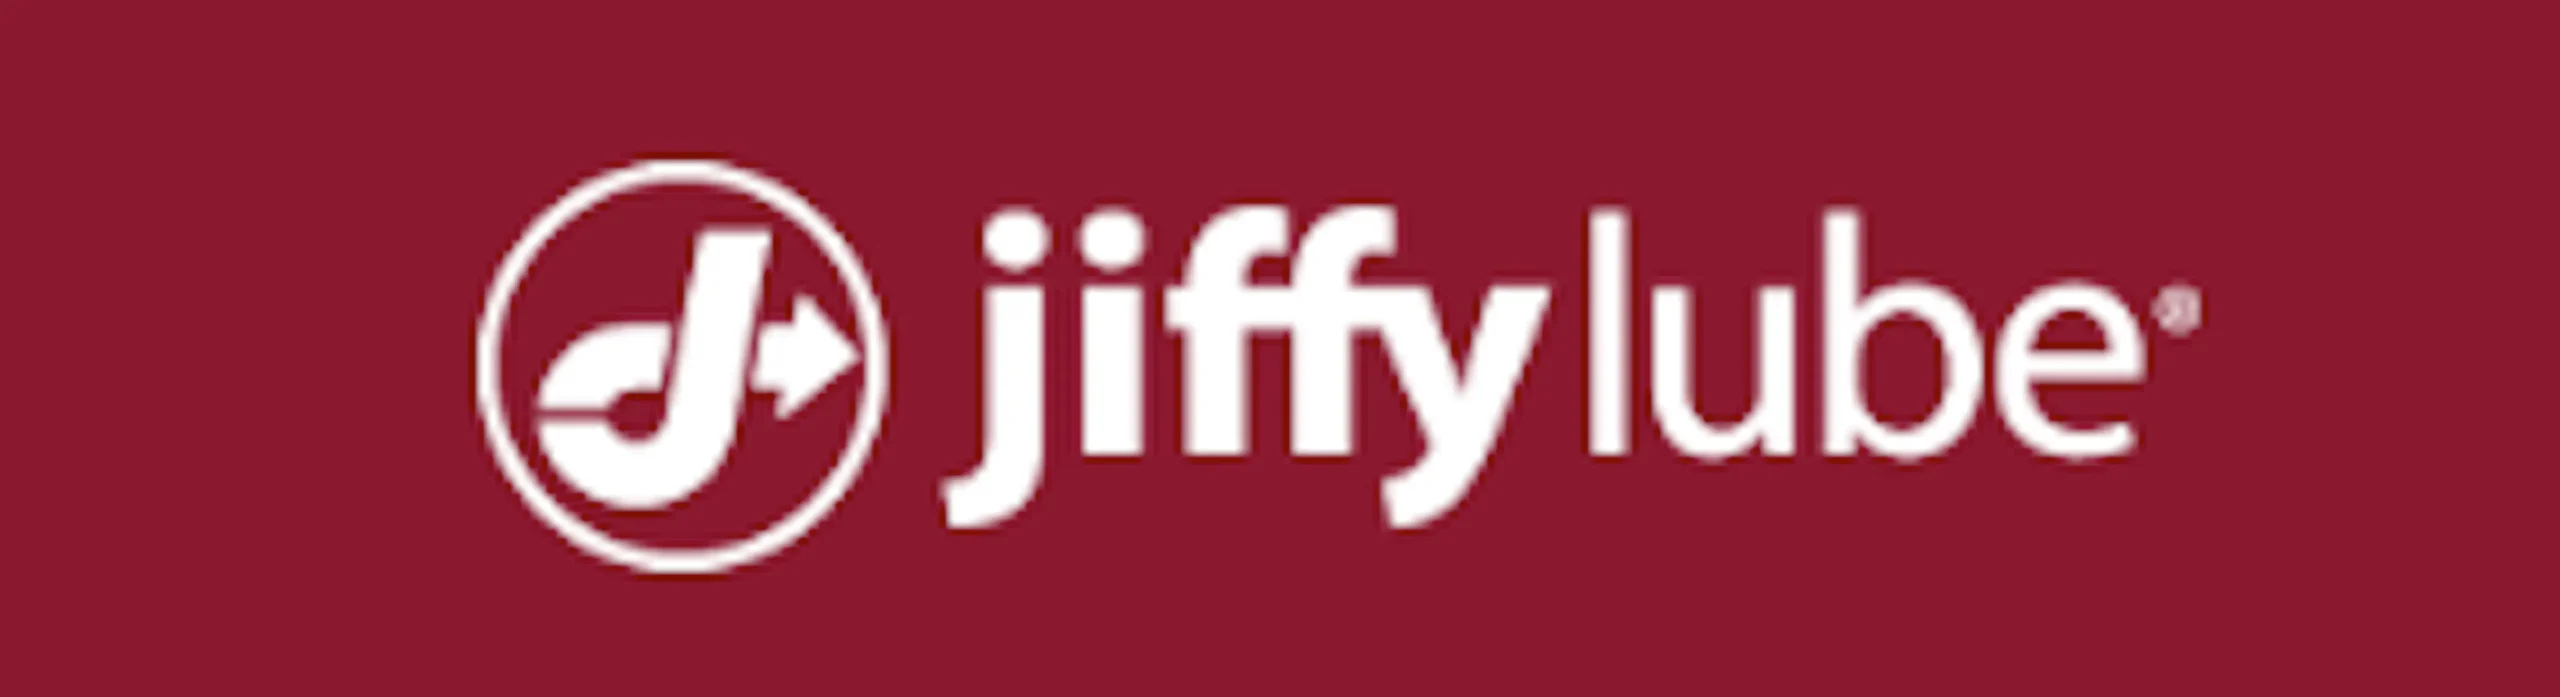 jiffy lube oil change coupon Logo